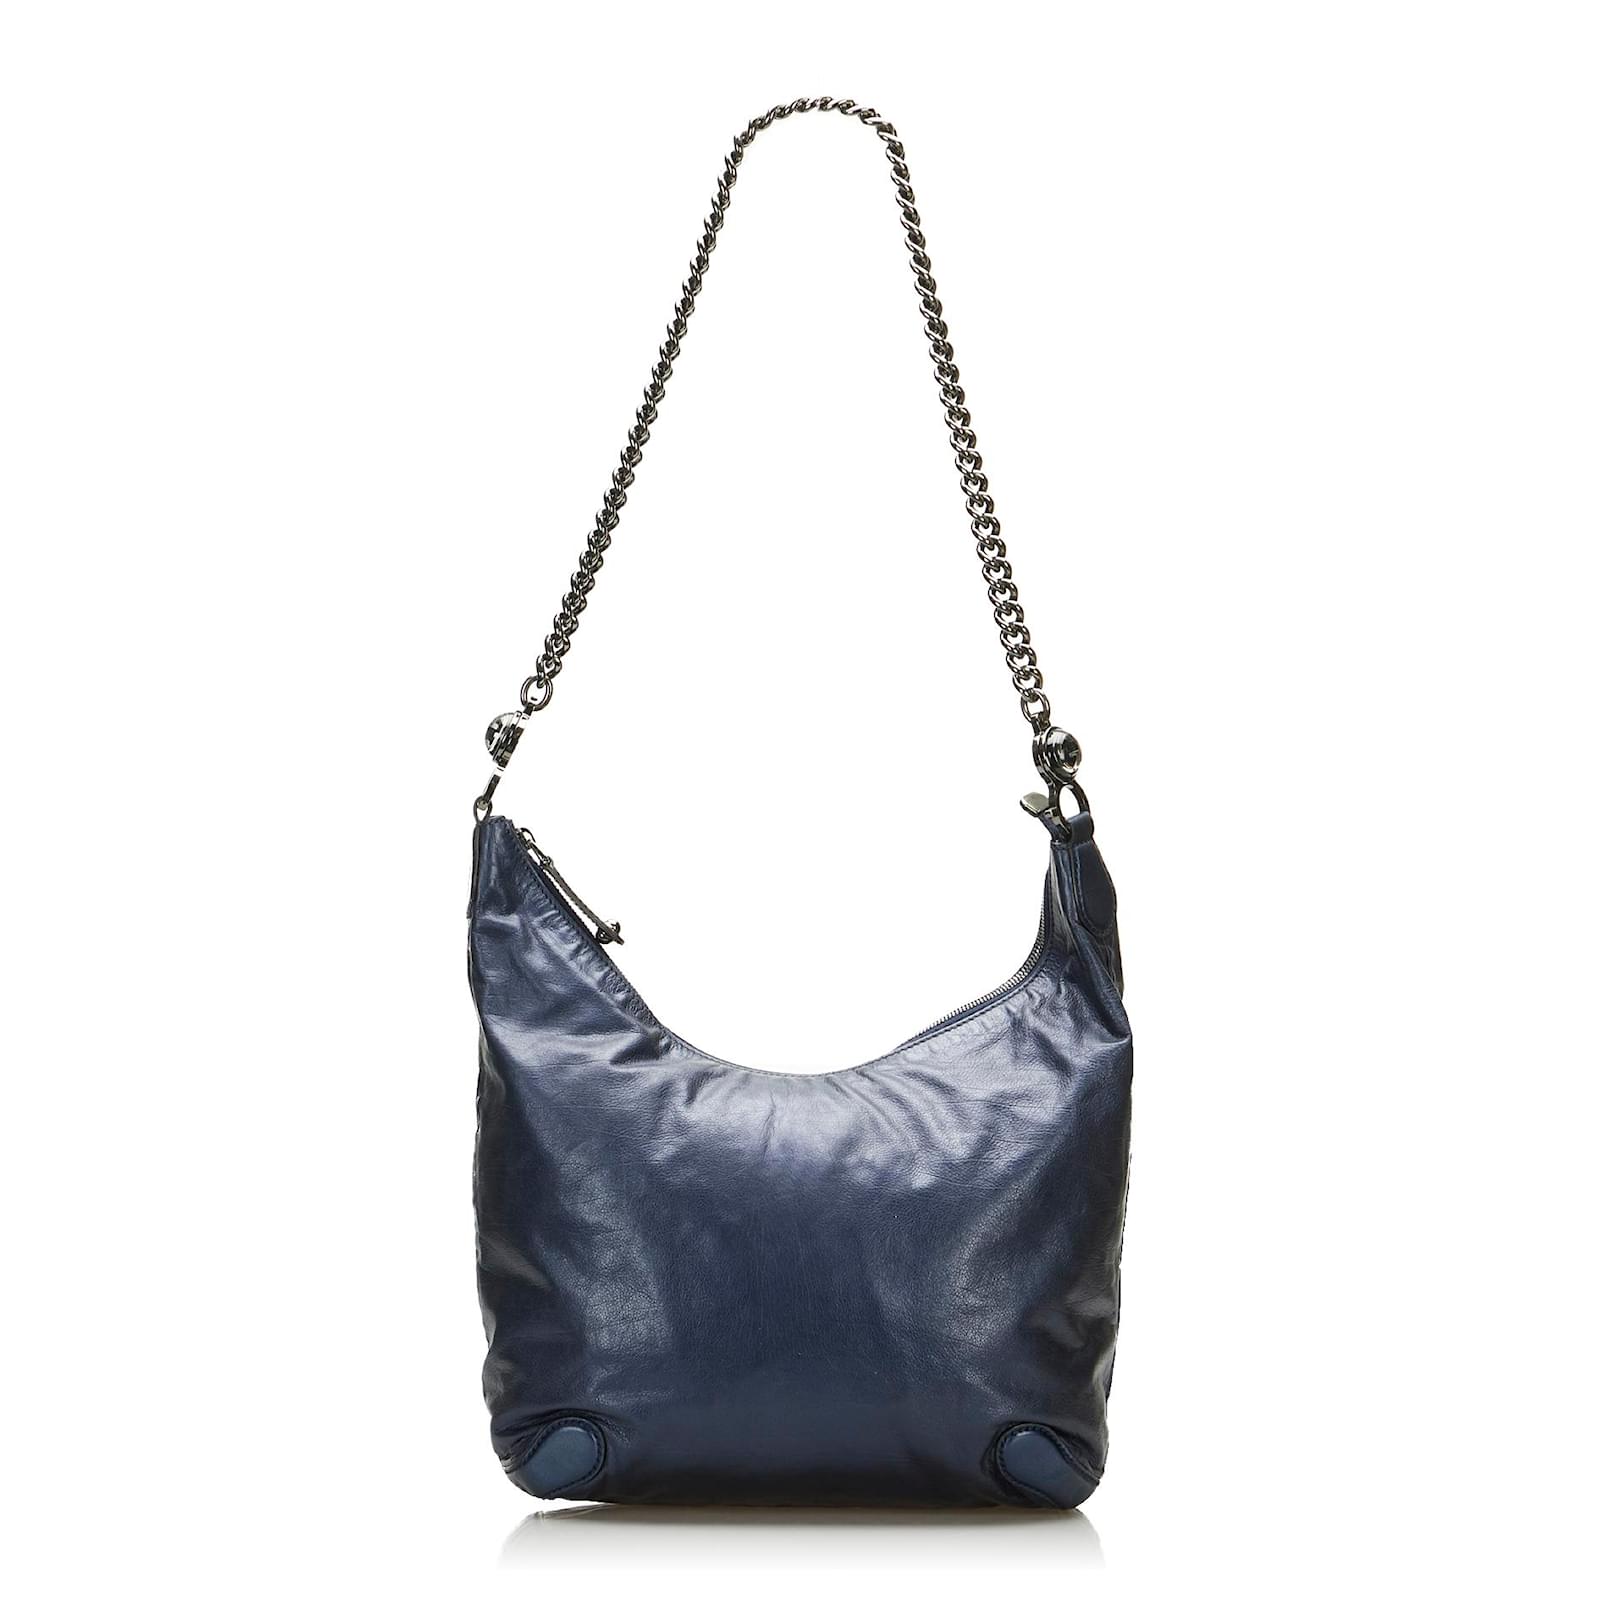 Gucci Black leather Galaxy Chain Hobo Shoulder Bag